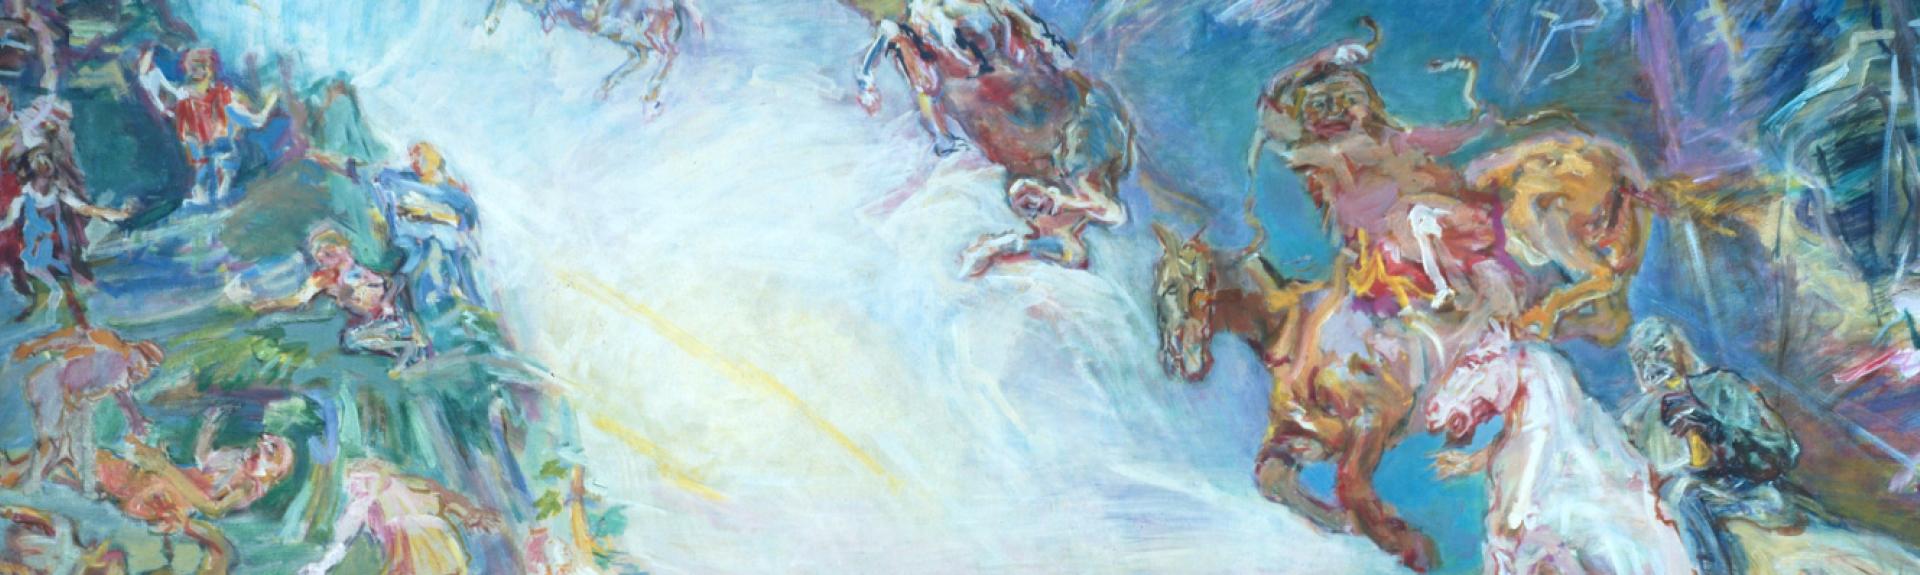 Oskar Kokoschka, Prometheus Triptych - central panel 'Apocalypse'